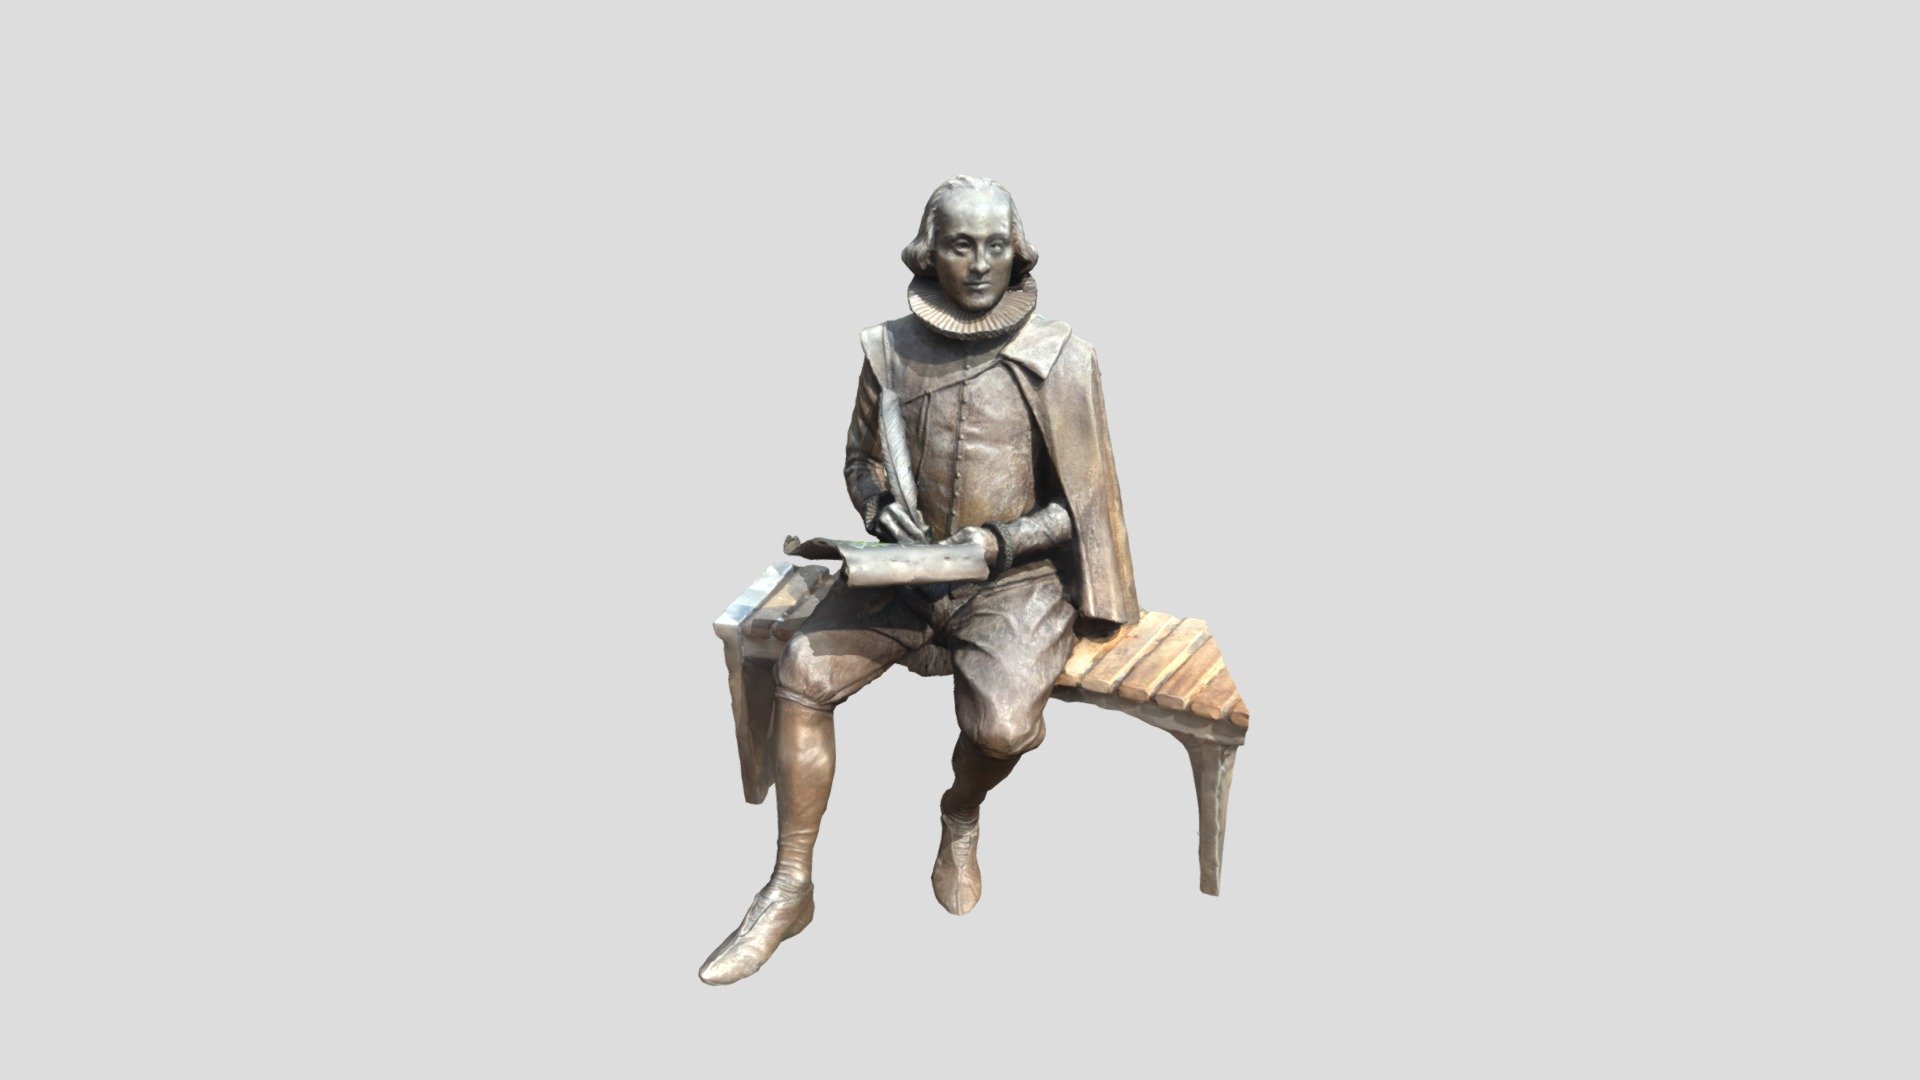 3D scan of William Shakespeare Statue - William Shakespeare Statue - Download Free 3D model by davidgersch 3d model